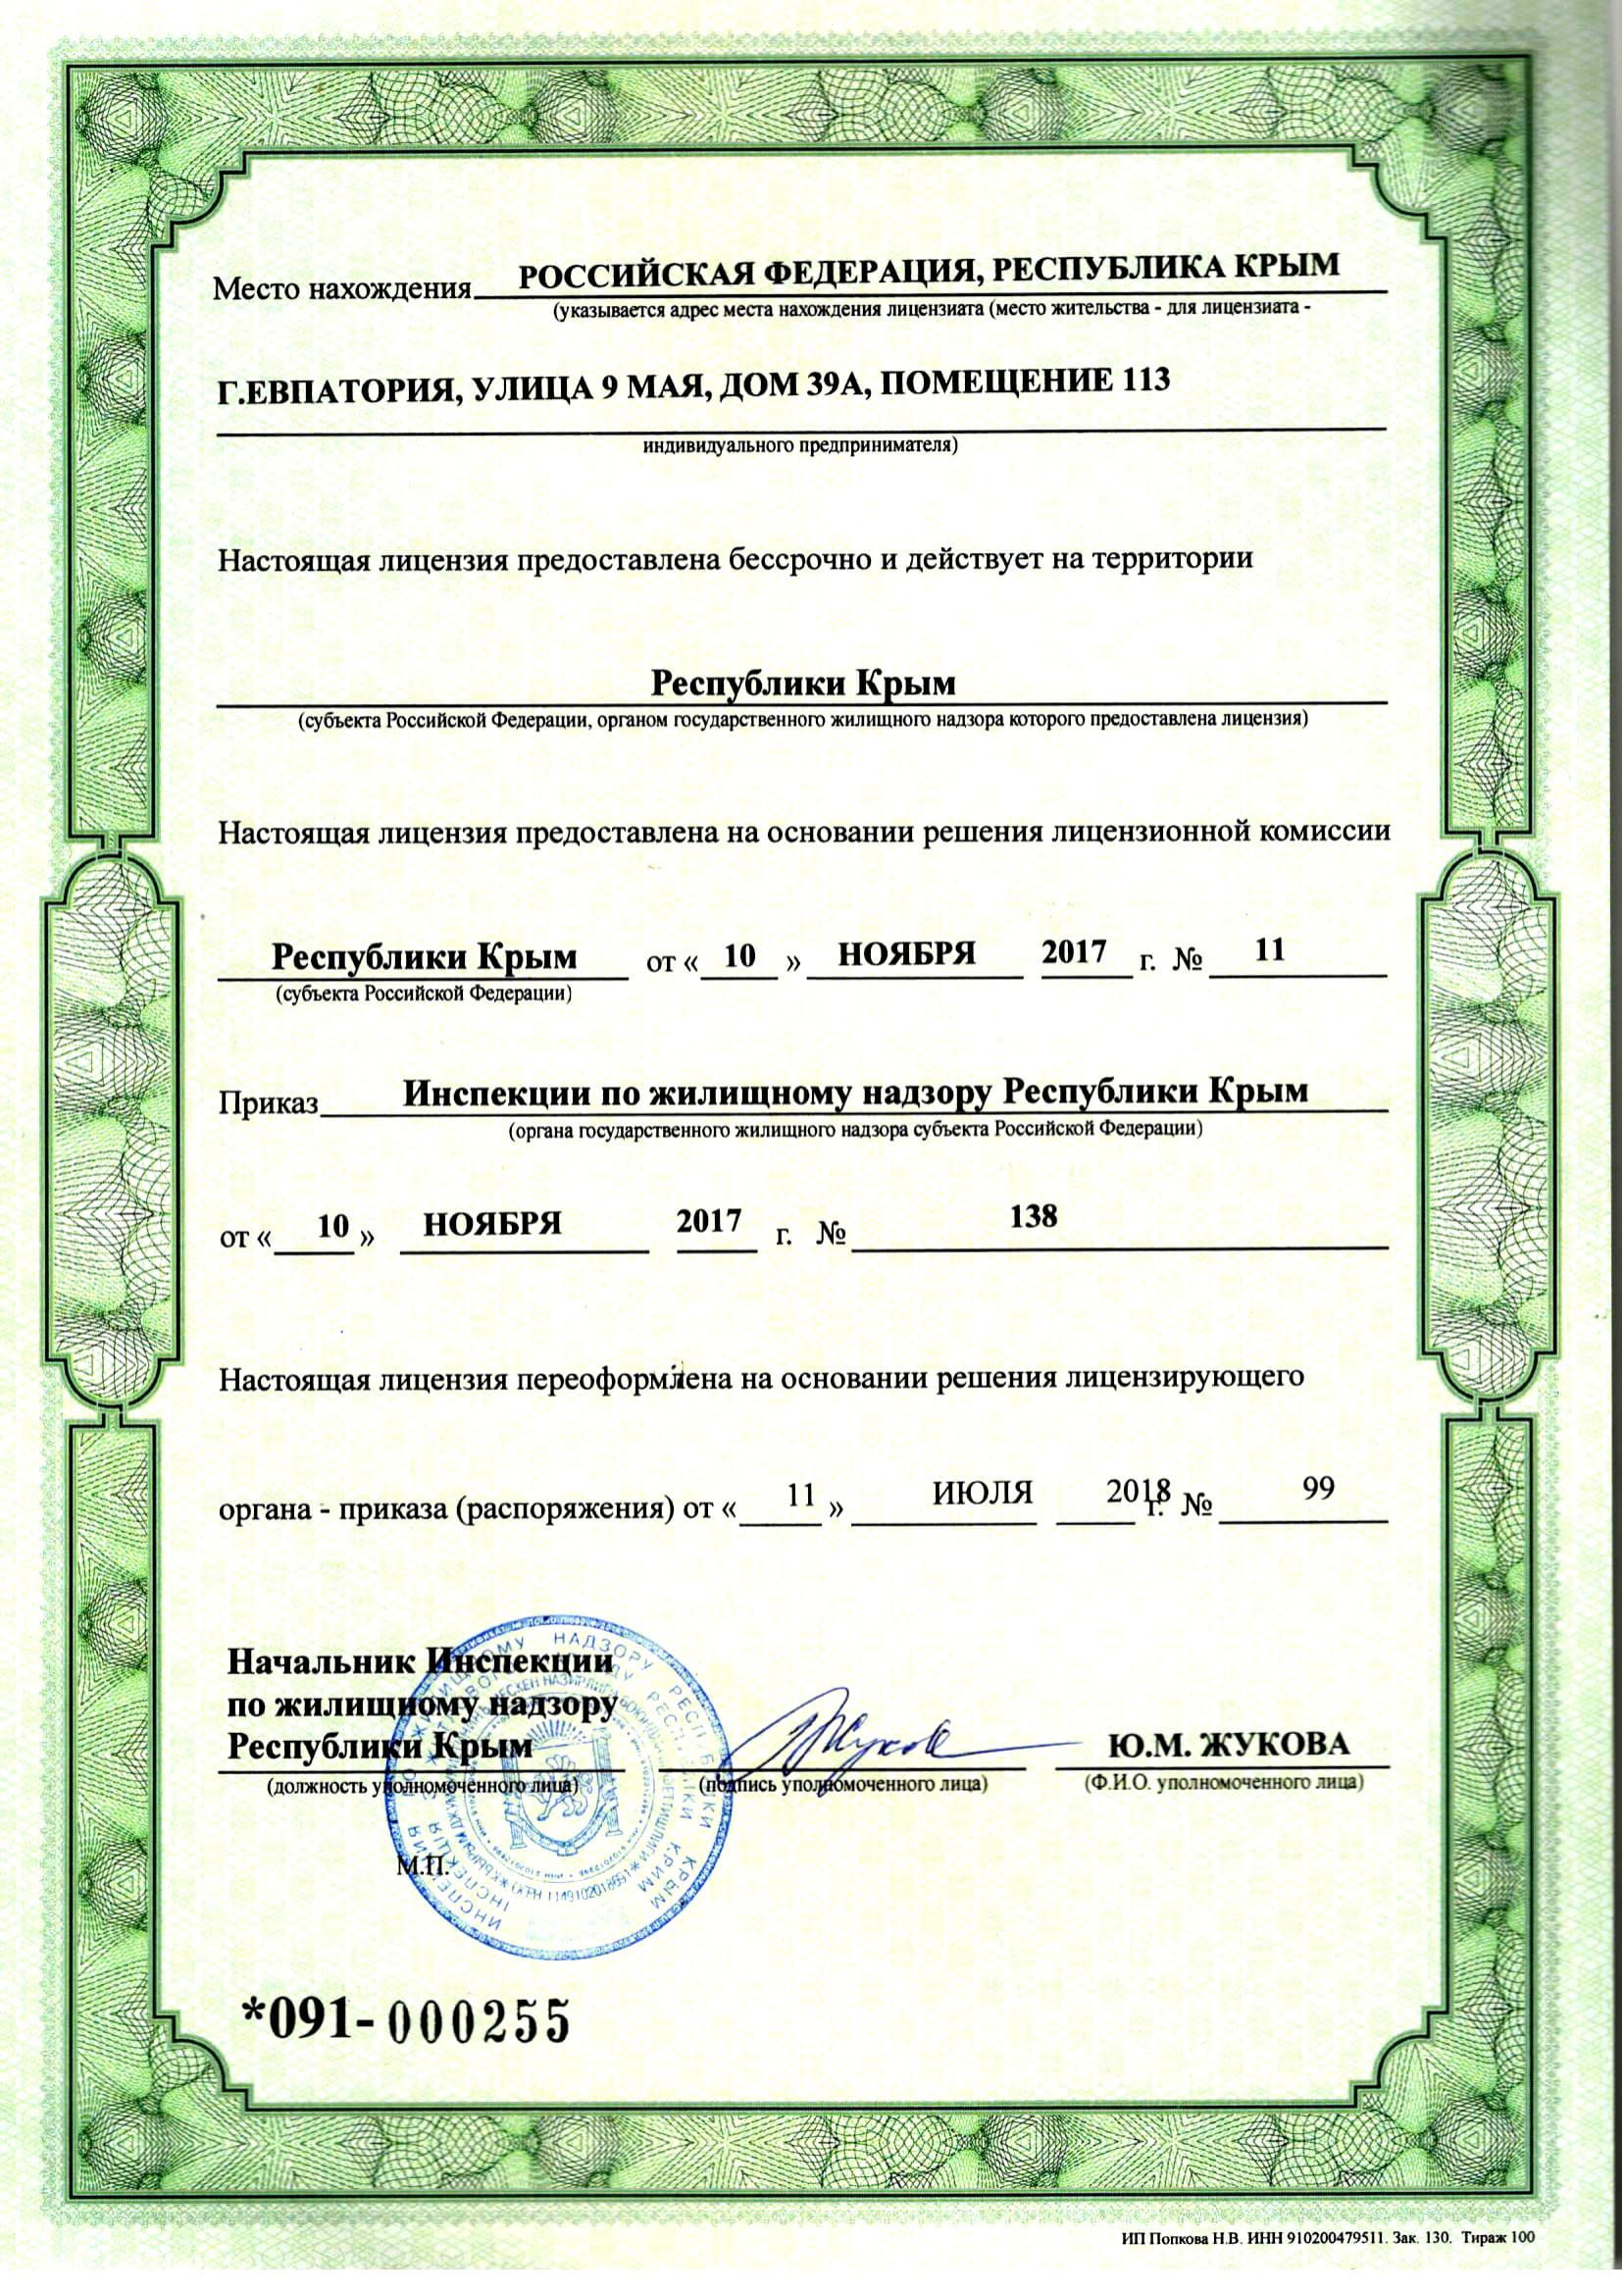 Лицензия на управление МКД №224 от 11.07.2018